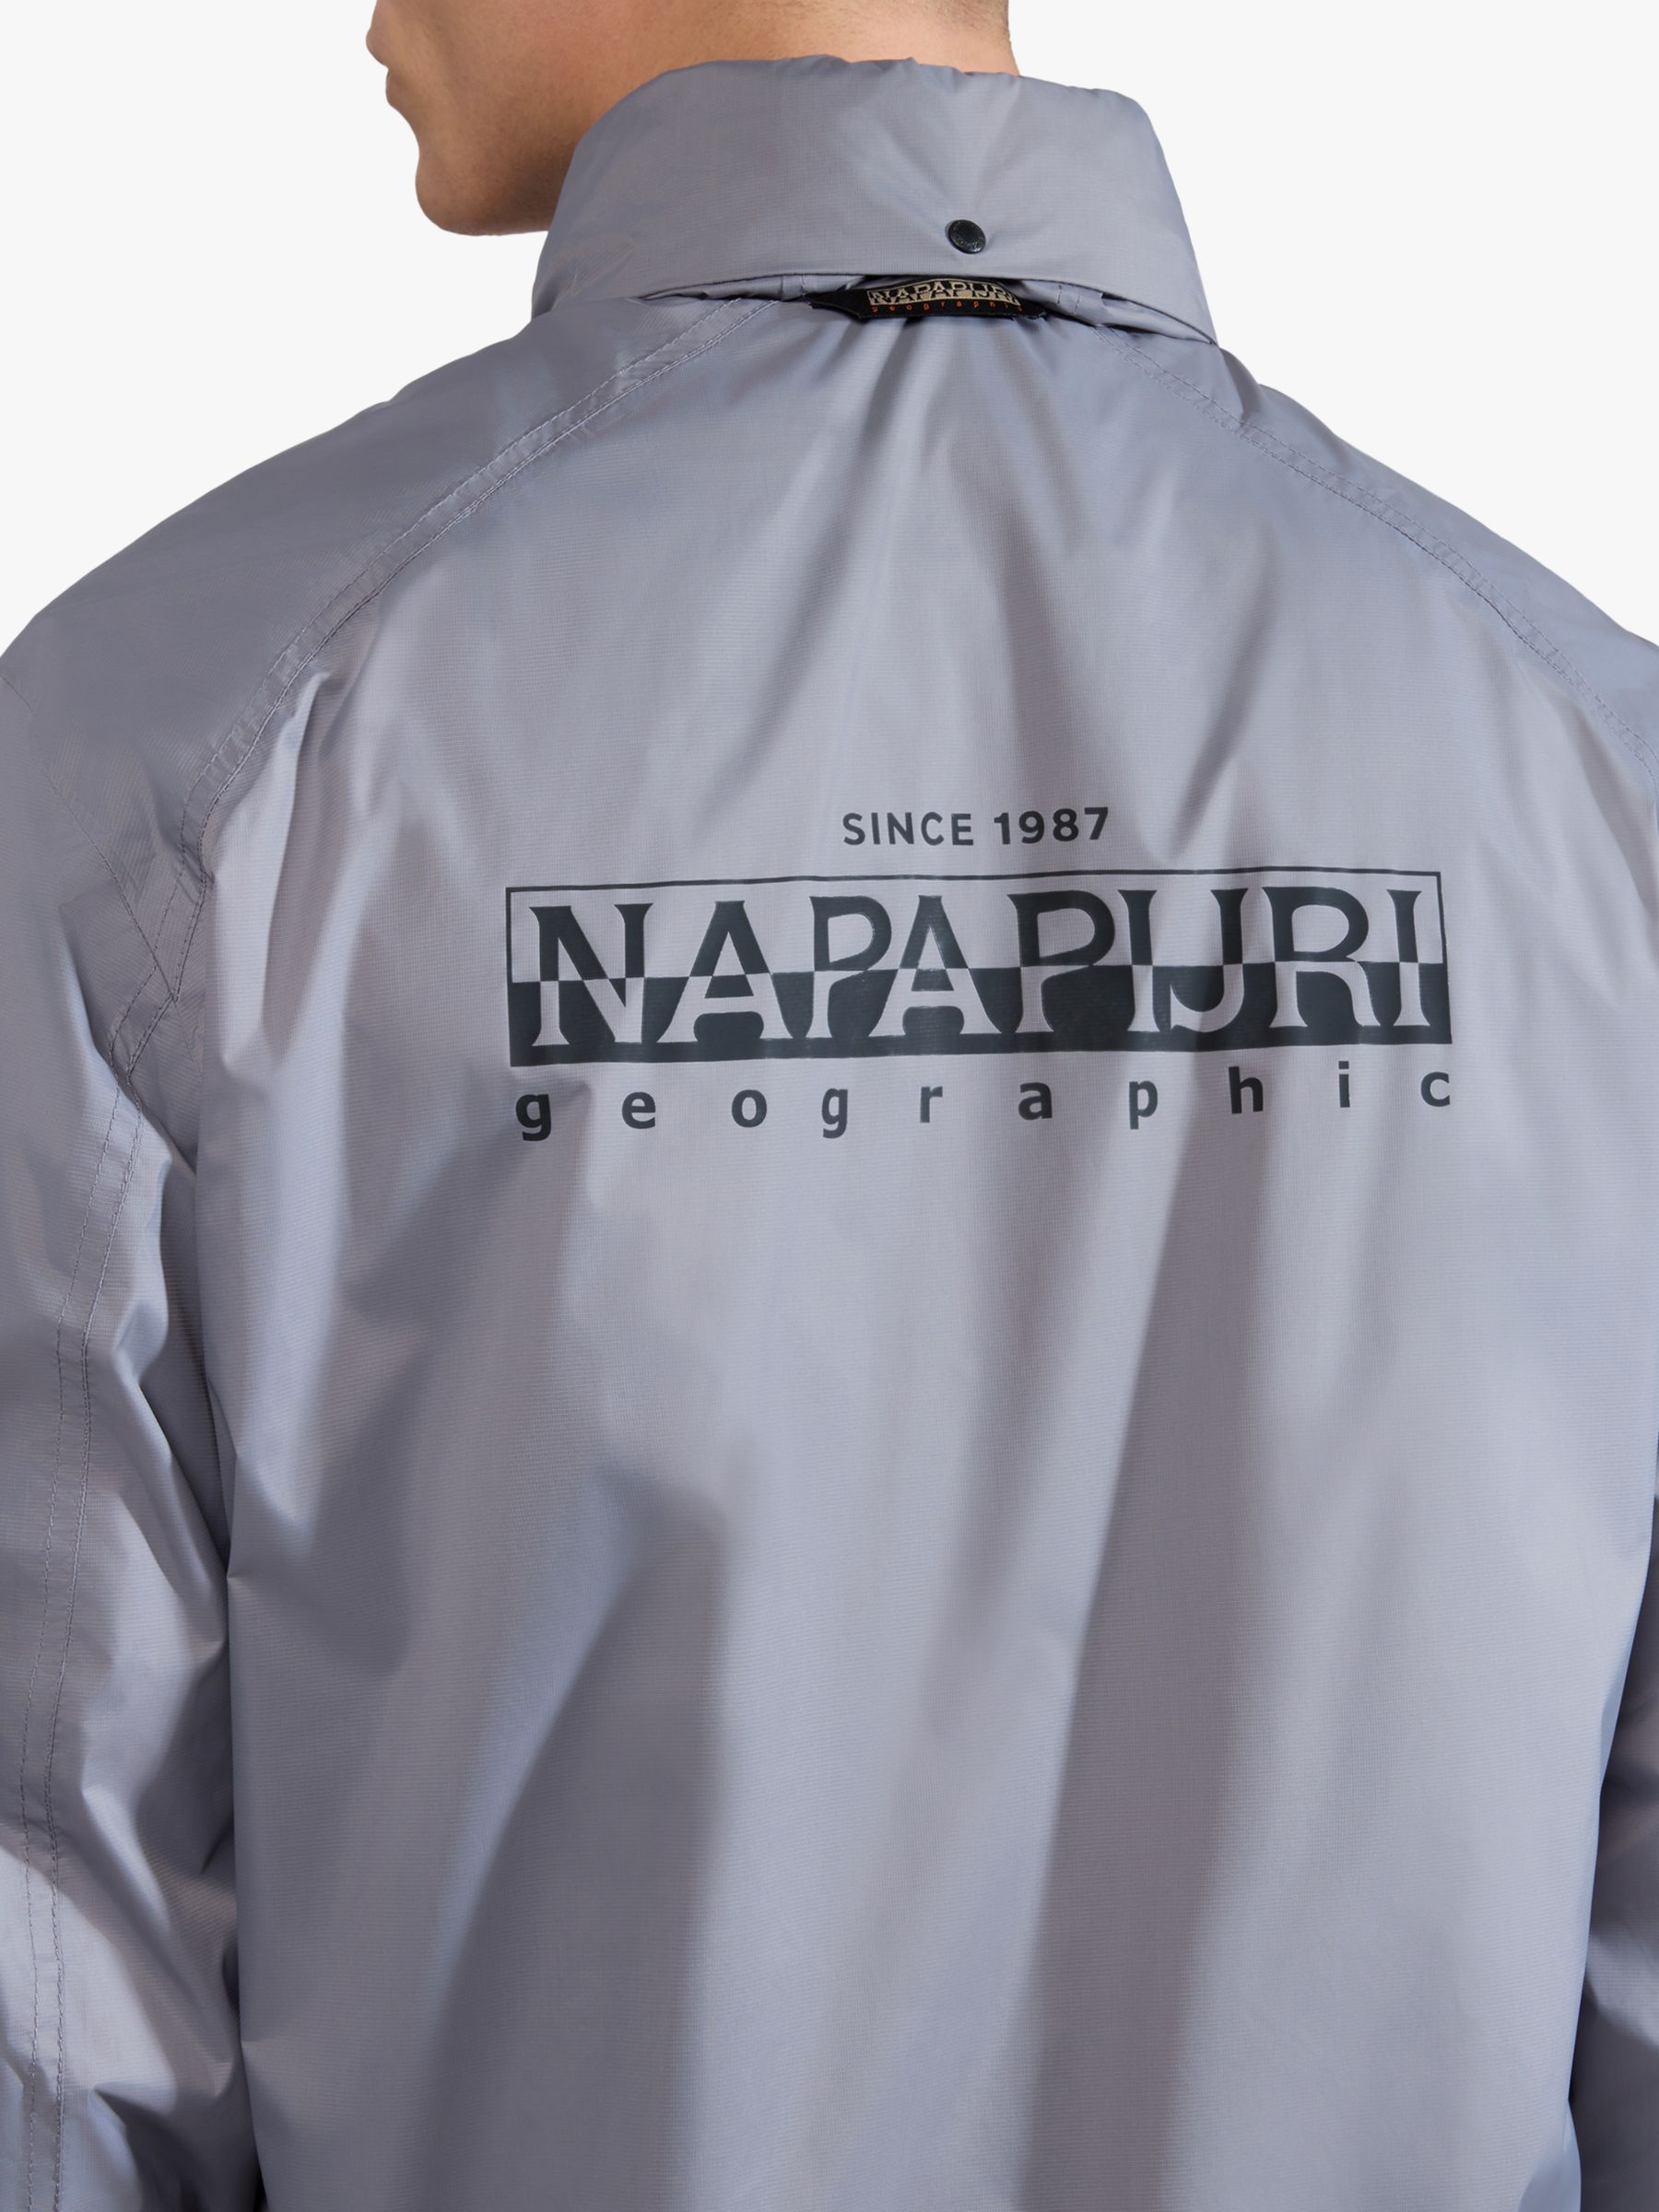 Buy Napapijri Cloudy Windbreaker Jacket, Grey Owl Online at johnlewis.com